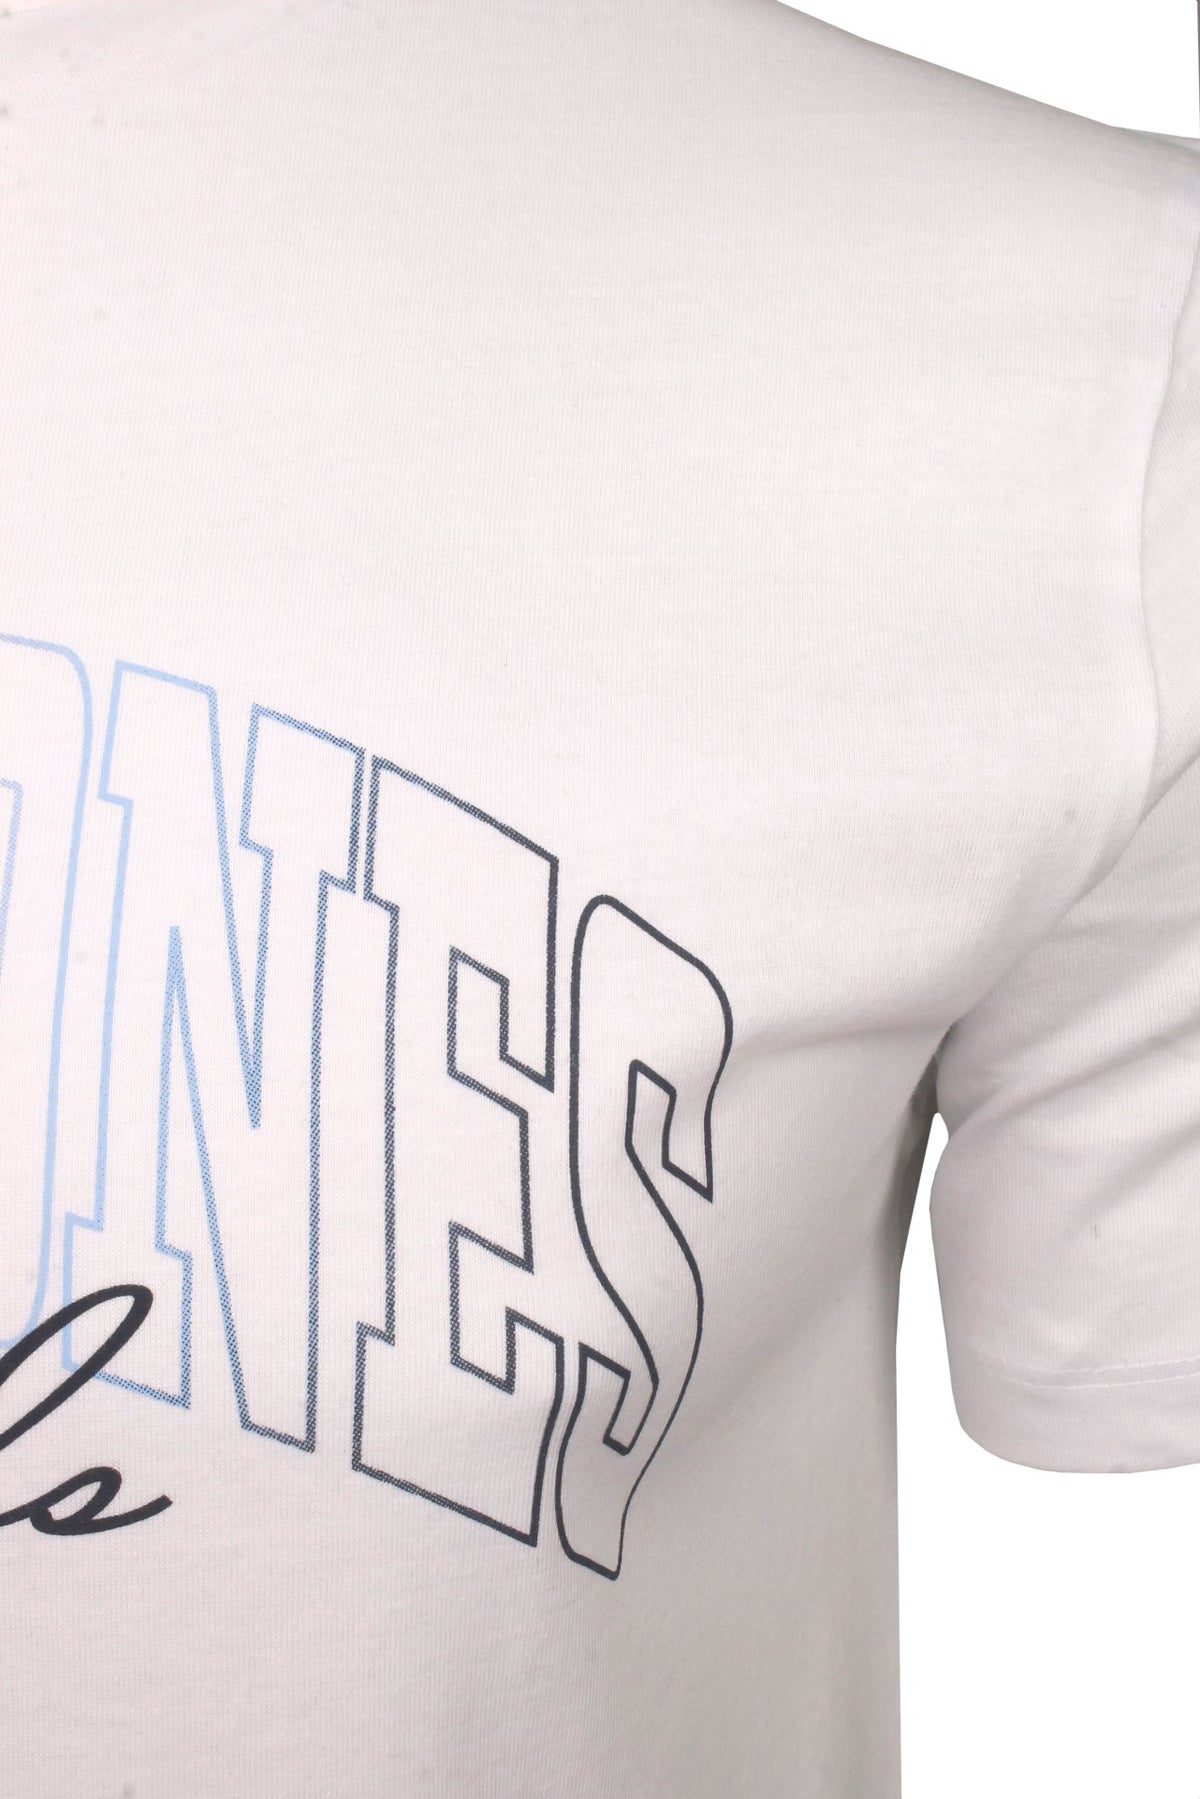 Jack & Jones Mens T-Shirt 'Jor Penny Tee', 02, 12207694, Bright White